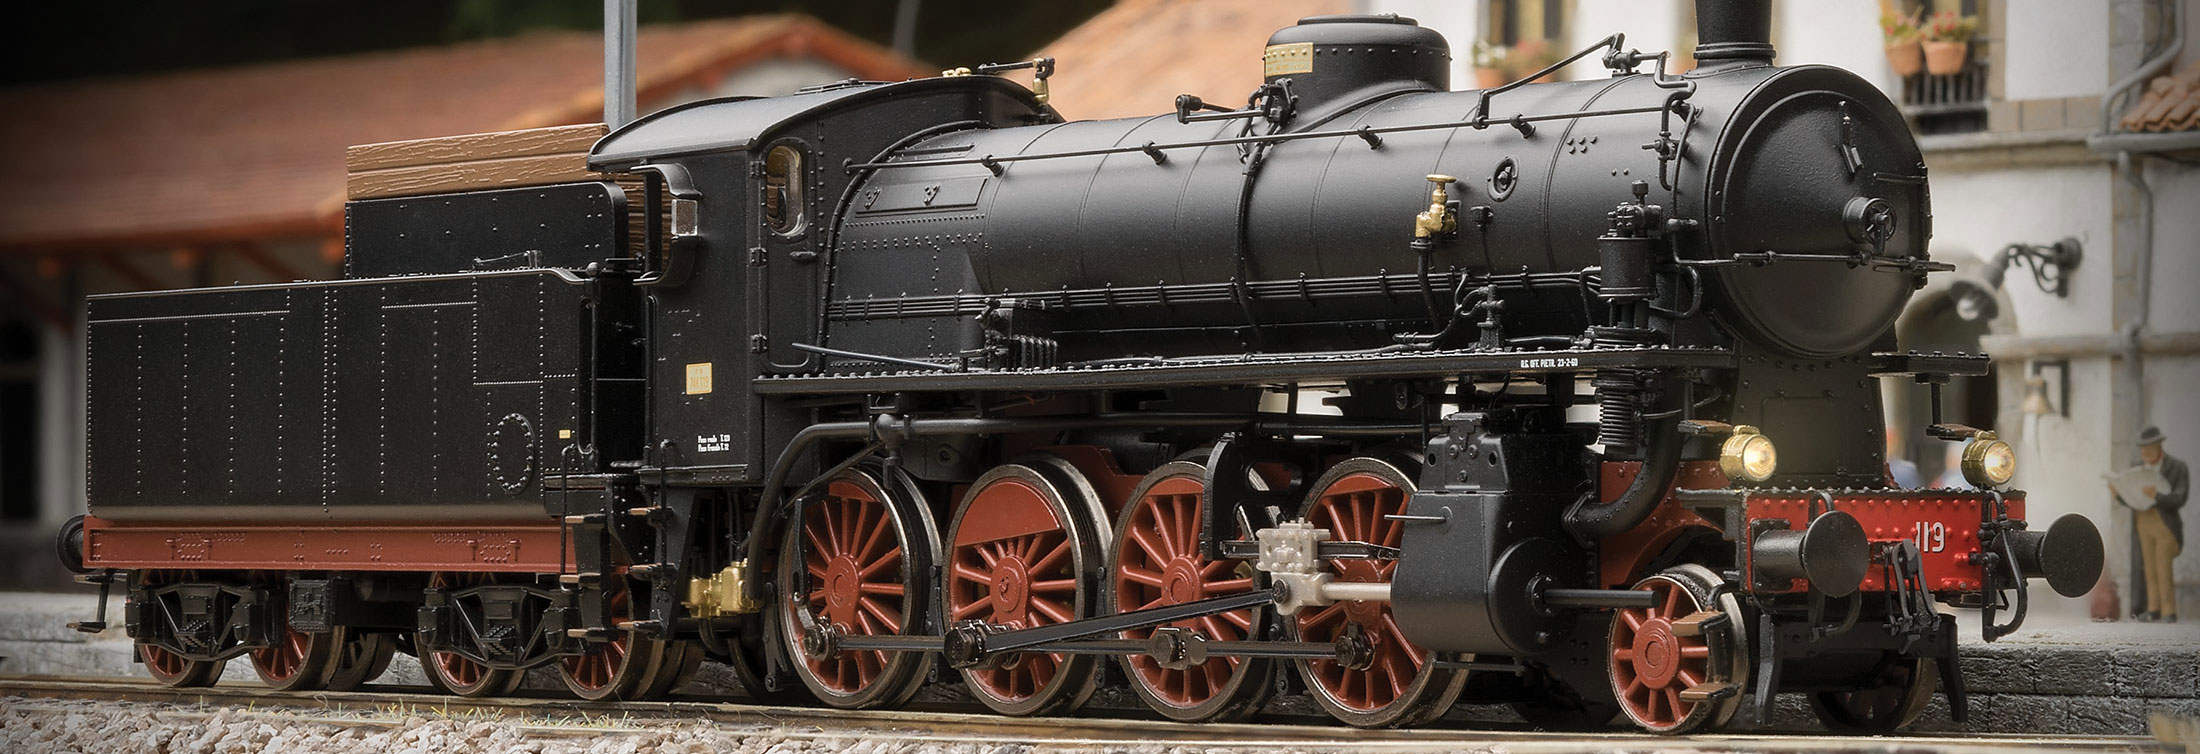 Model train on tracks